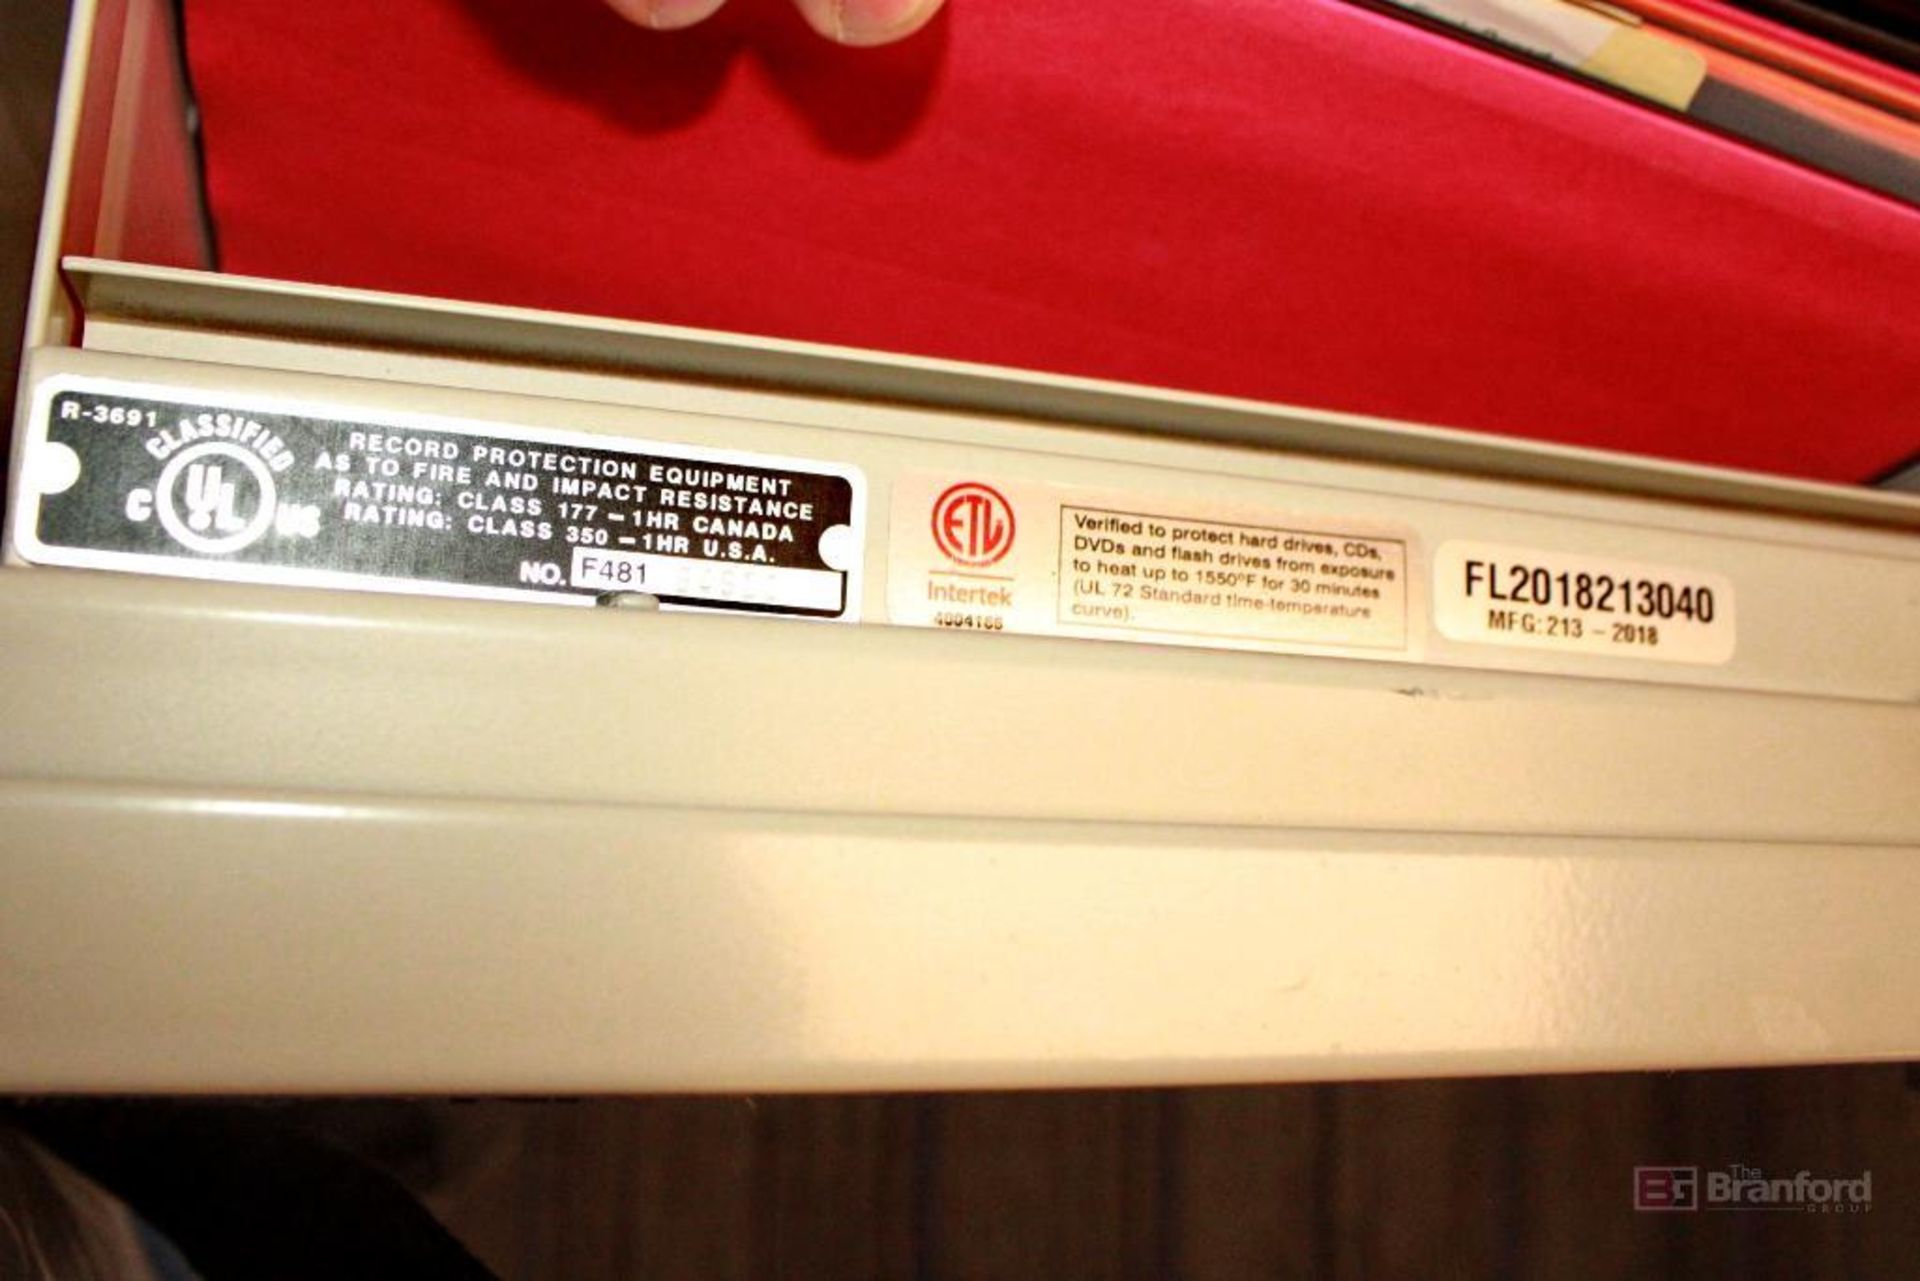 FireKingTurtle Series 4-Drawer Fireproof Vertical R-3691 File Cabinet - Image 3 of 3